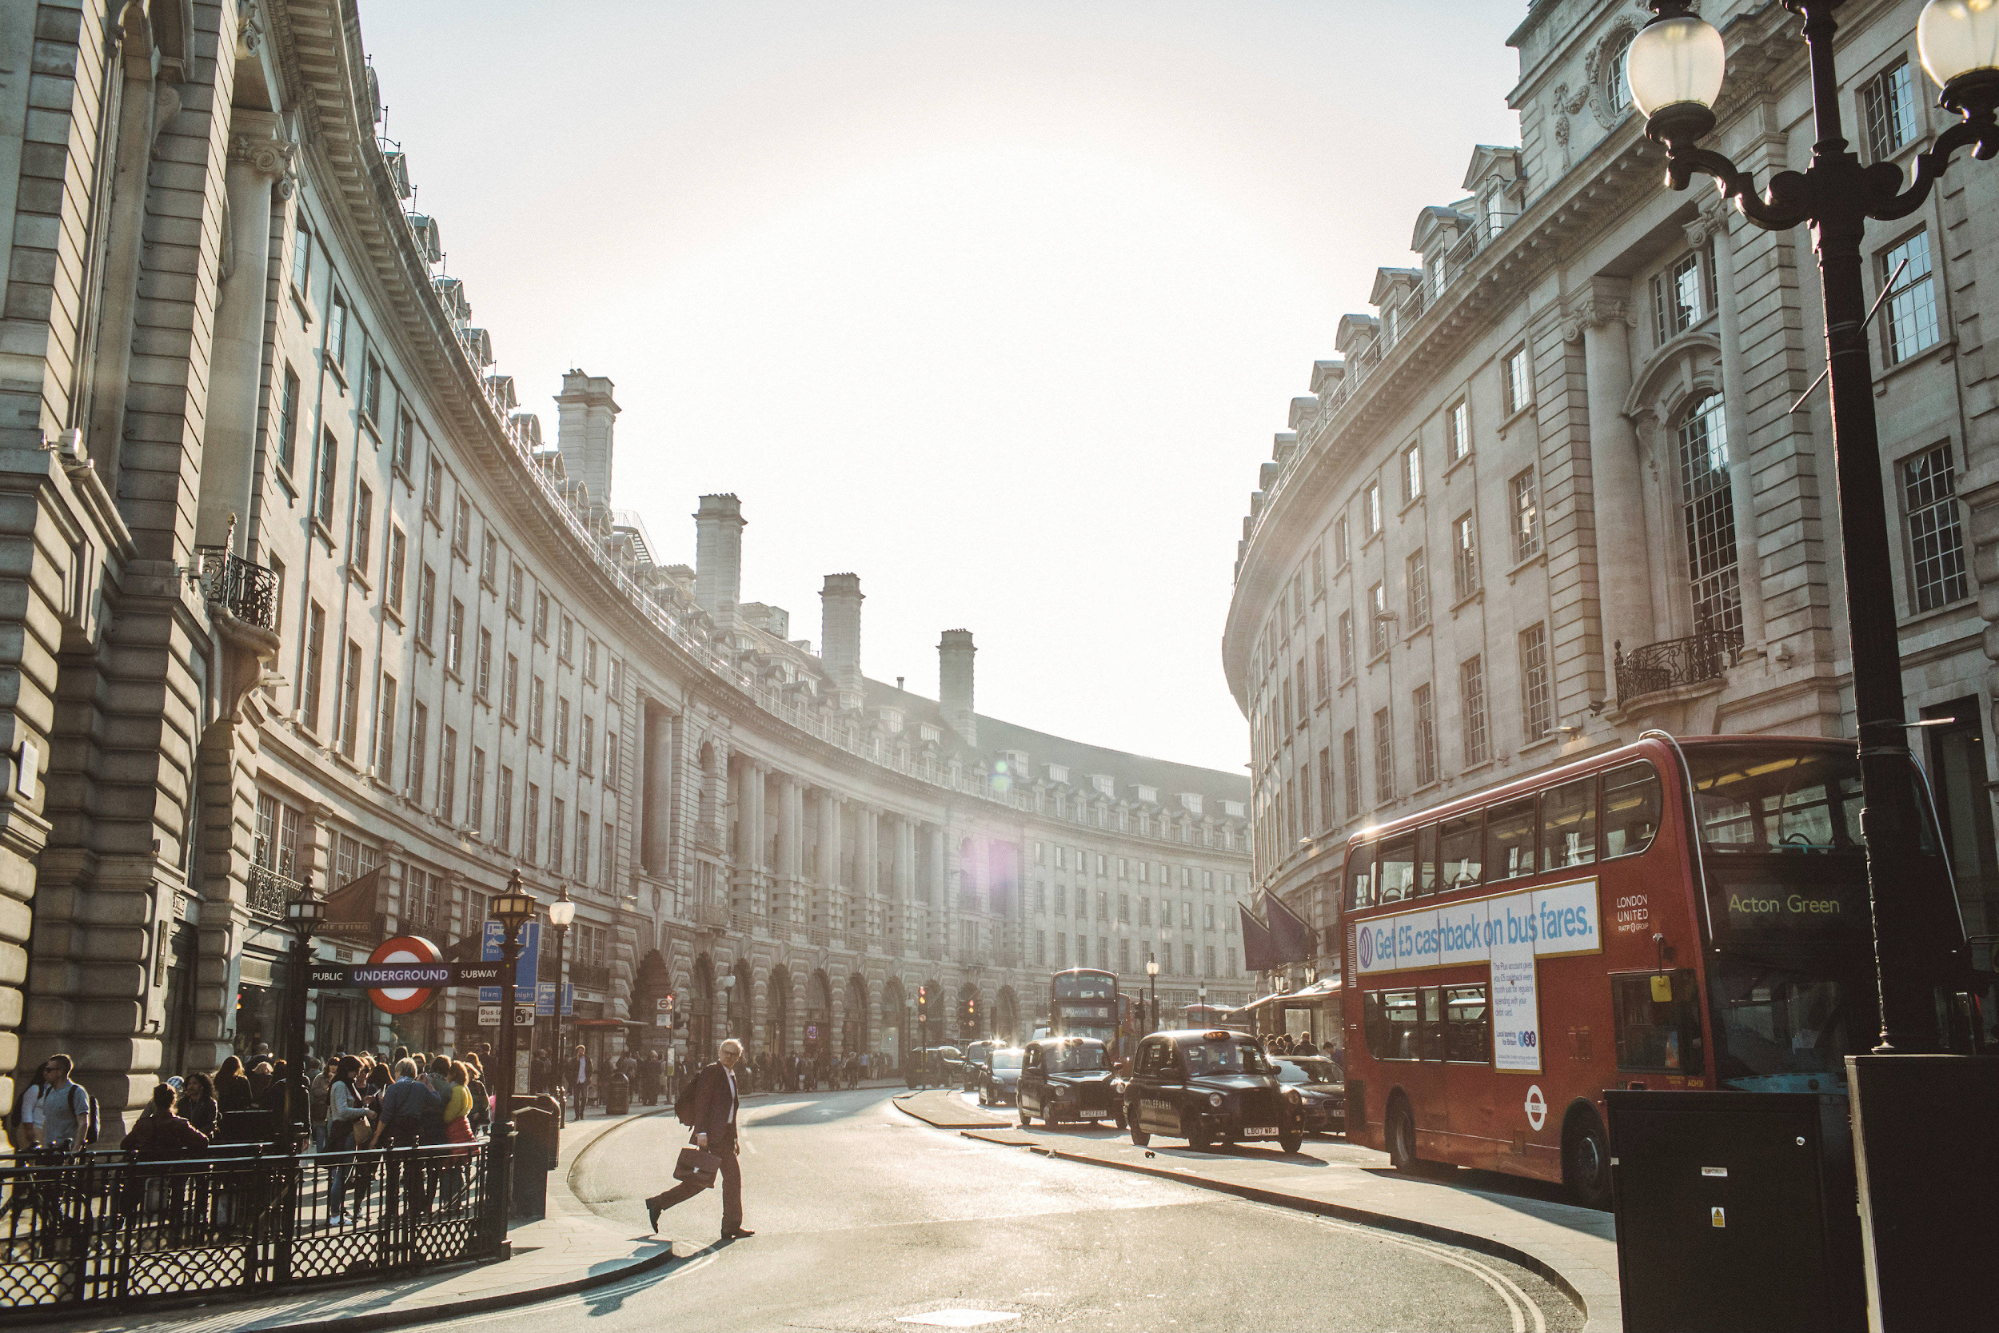 London's Regent St., one of the world's poshest shopping streets